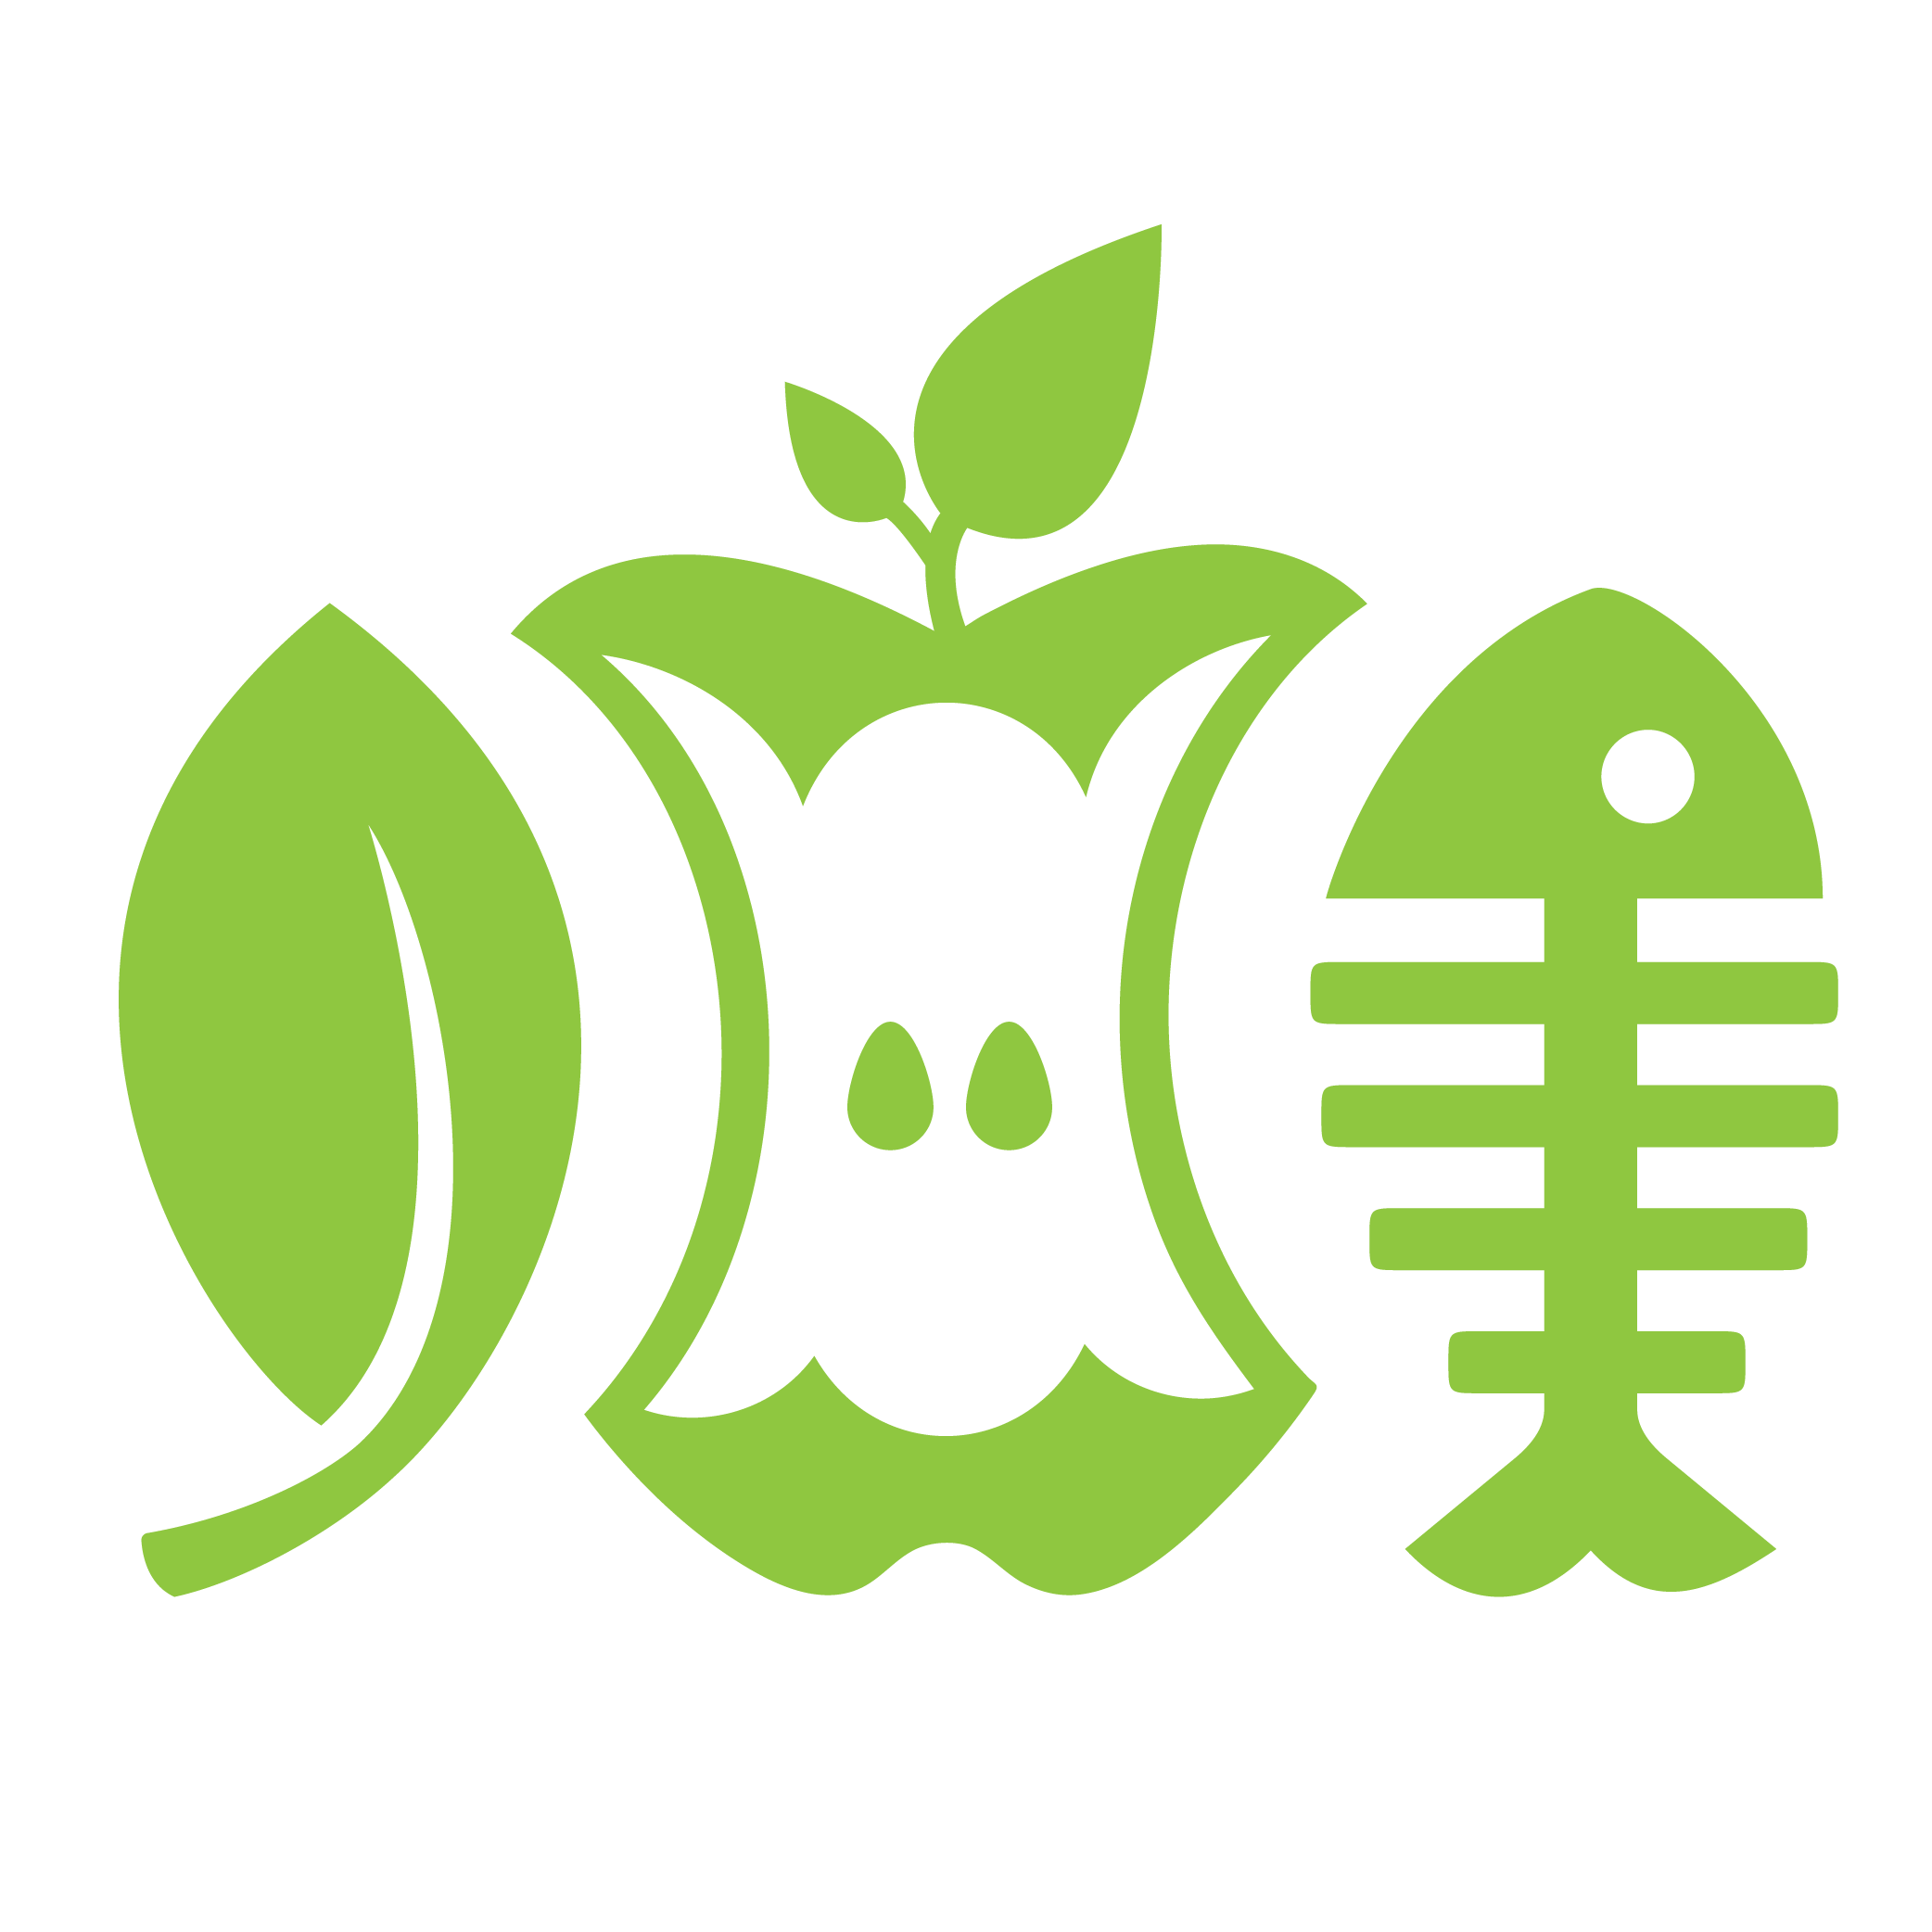 graphic logo of leaf, apple core, fishbone